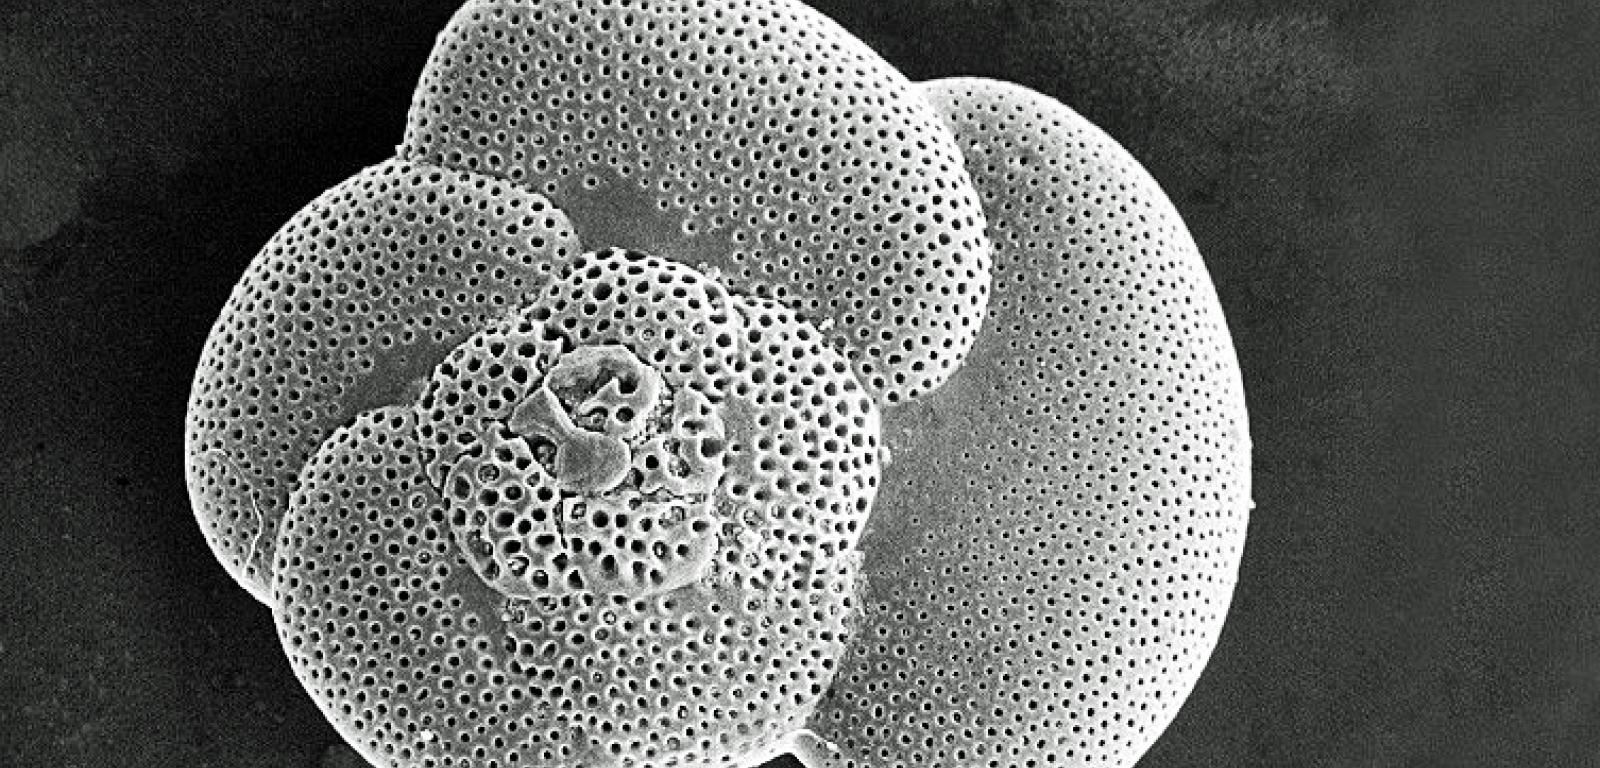 Otwornica planktonowa (skanignowa mikroskopia elektronowa).